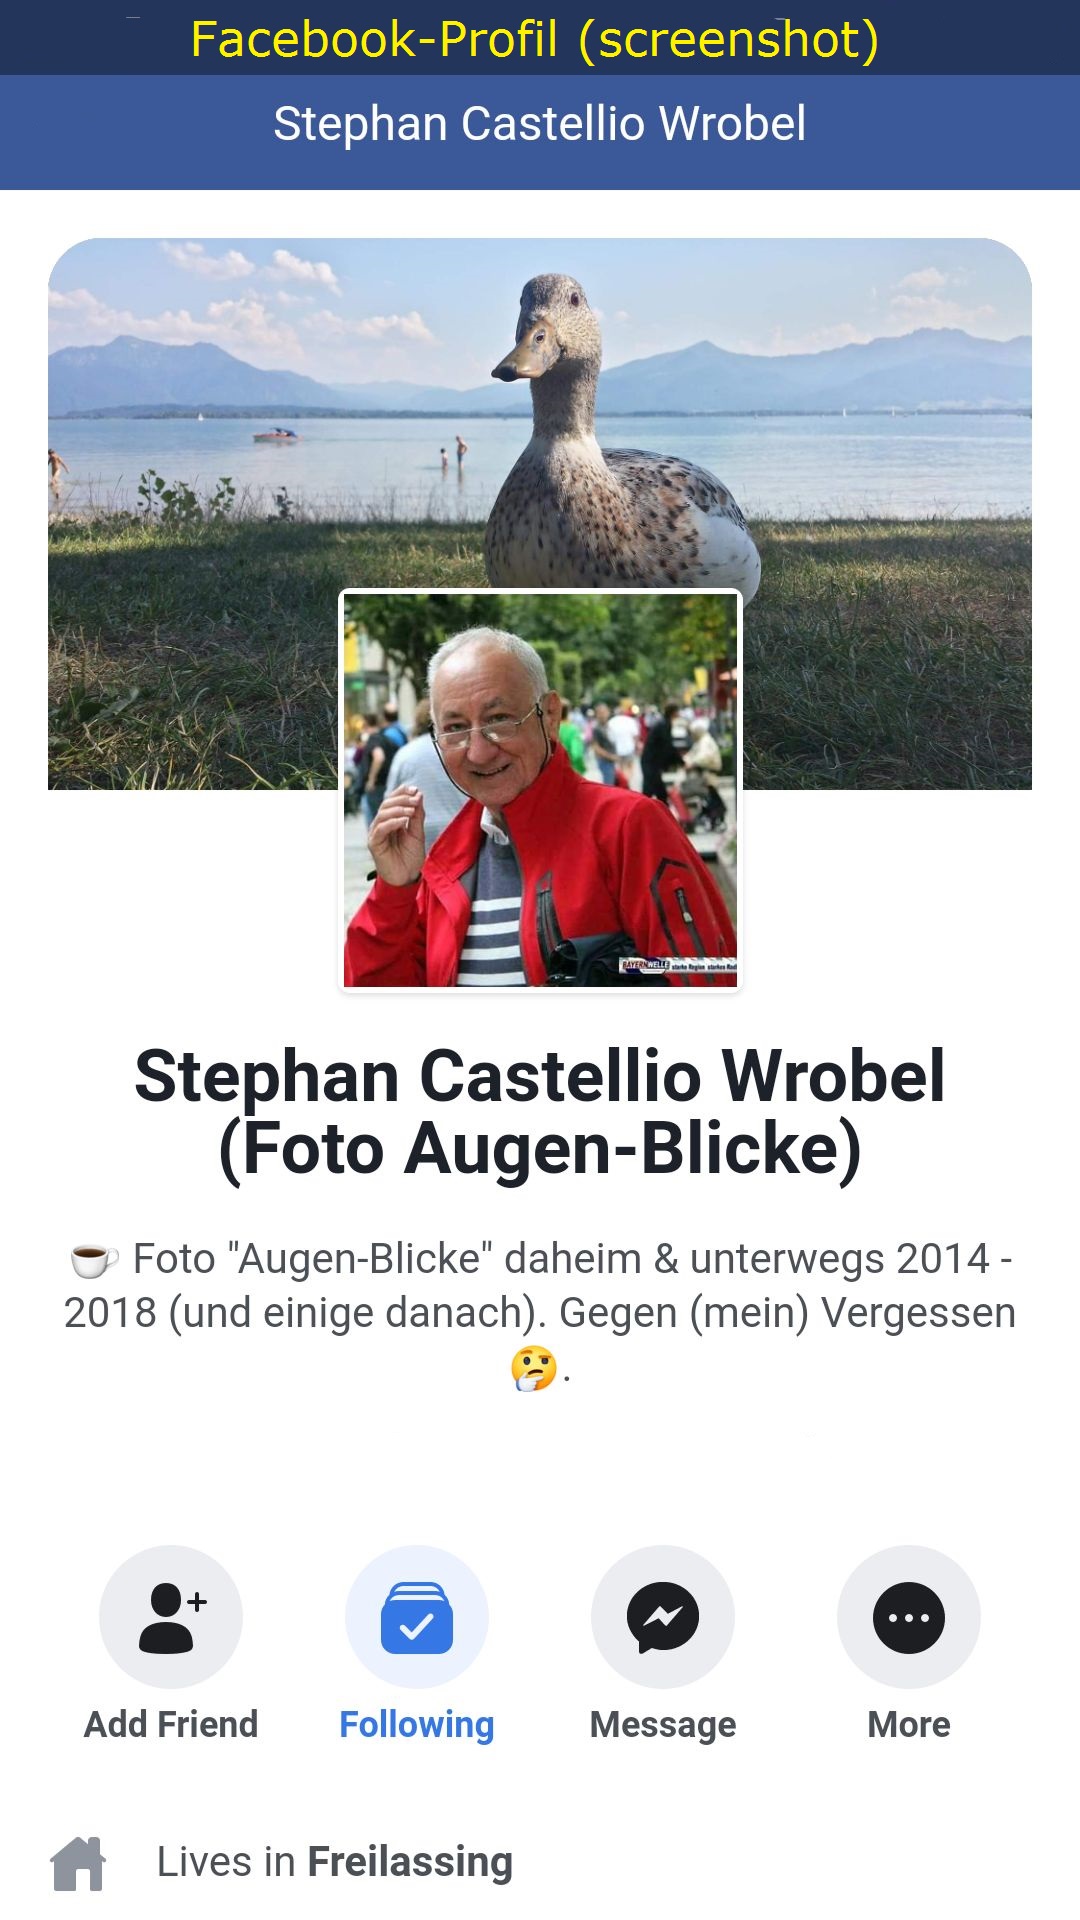 Facebook-Profil "Stephan Castellio Wrobel (Foto Augen-Blicke""